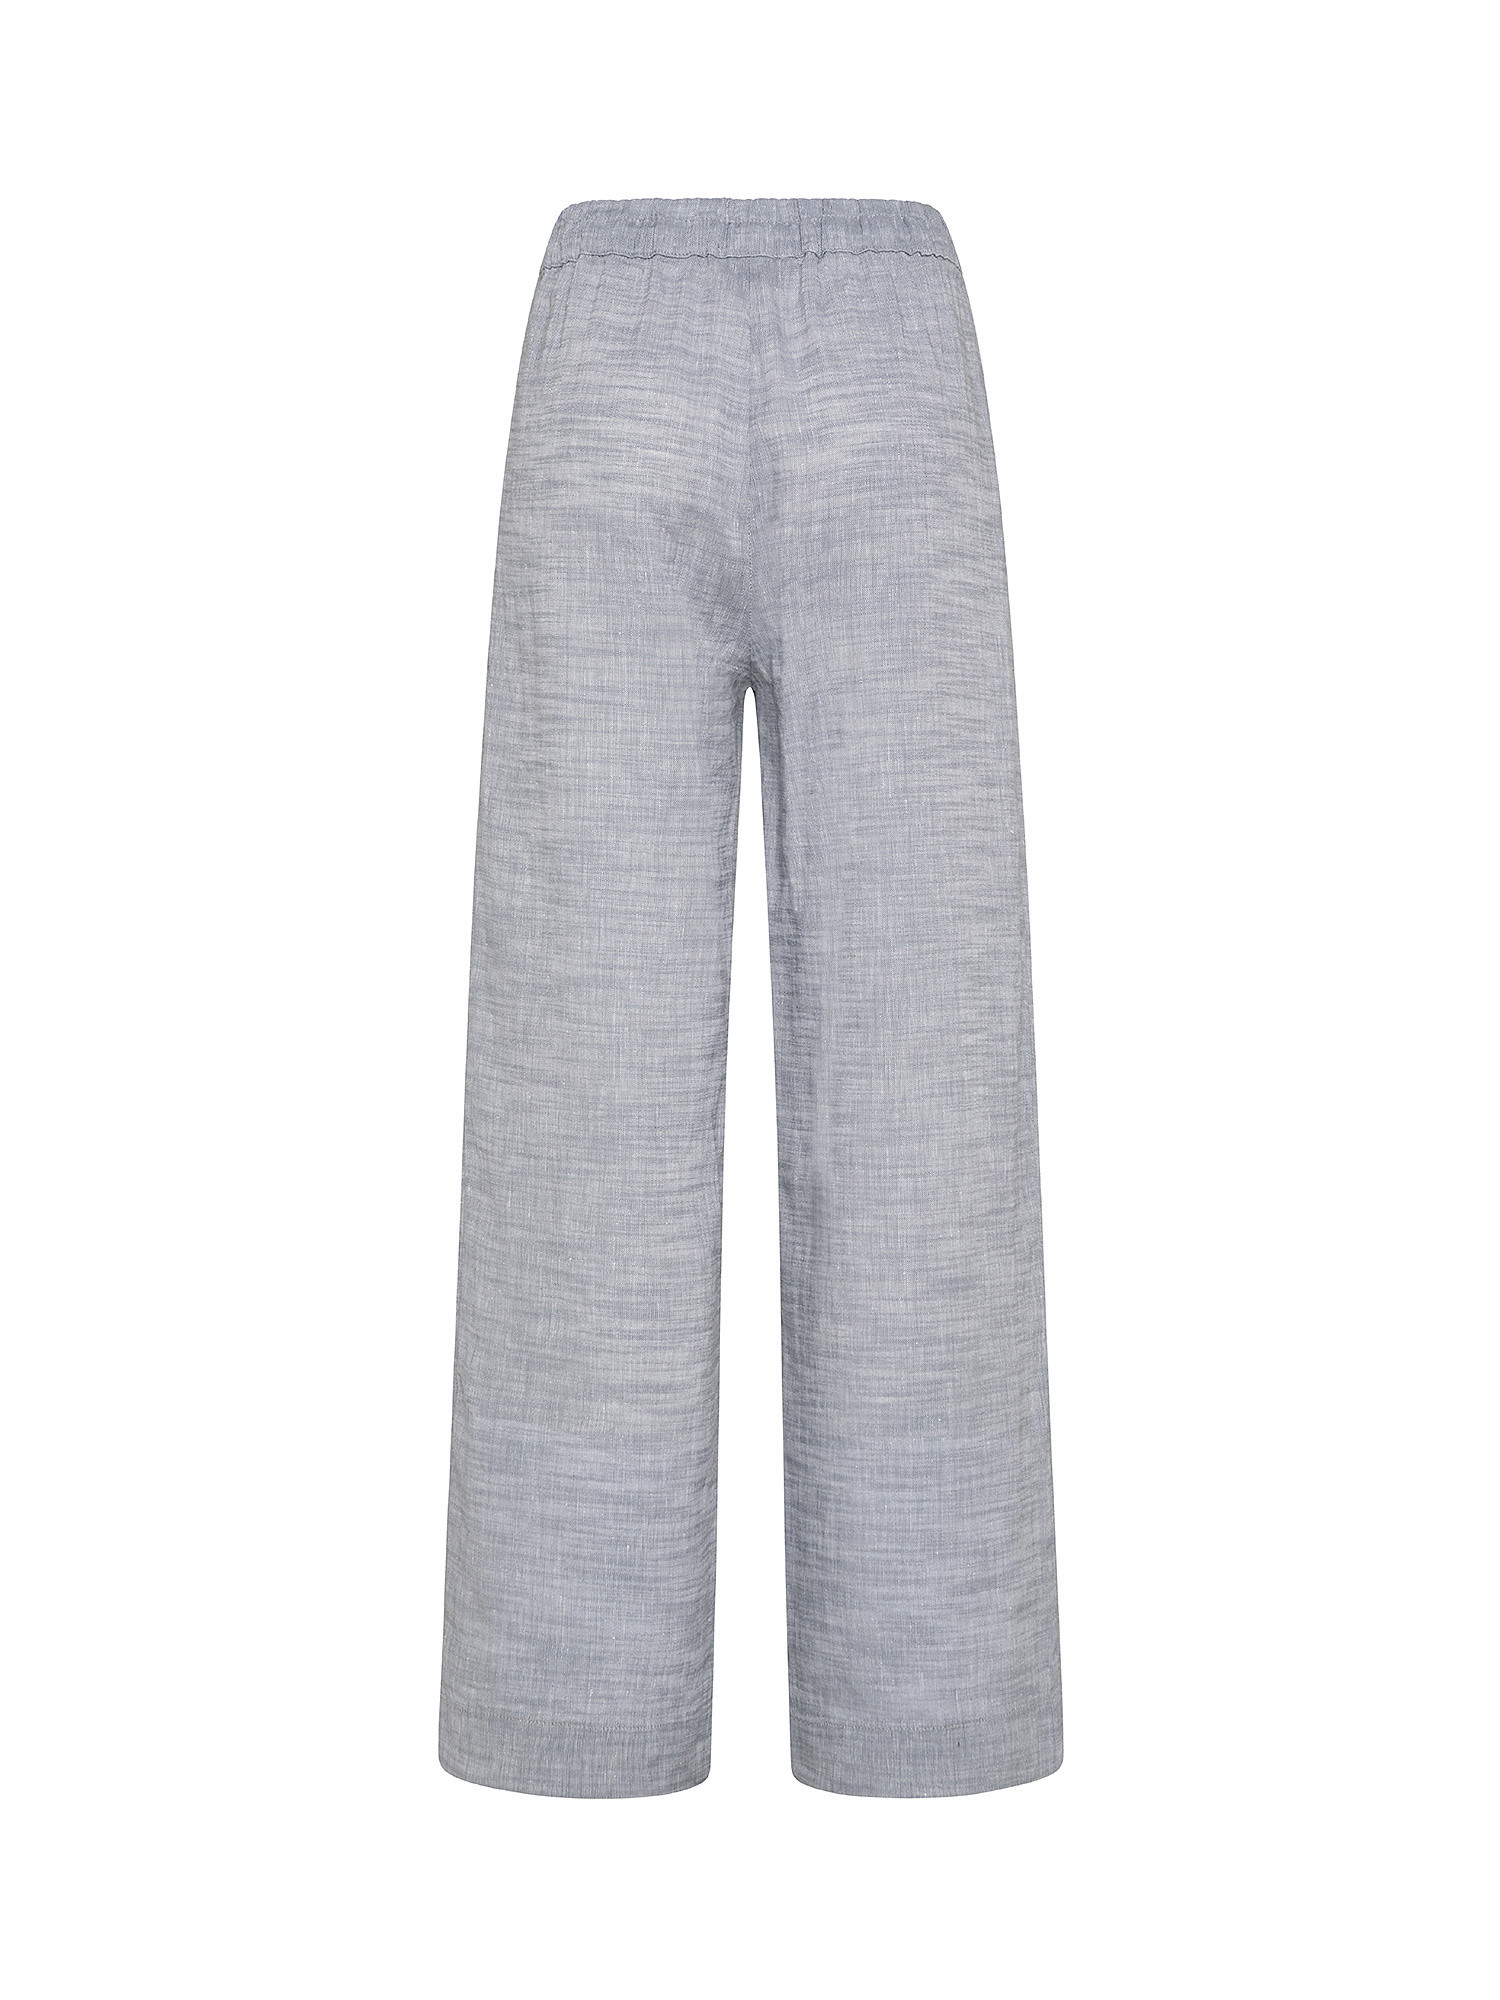 Pantalone in misto lino, Grigio chiaro, large image number 1